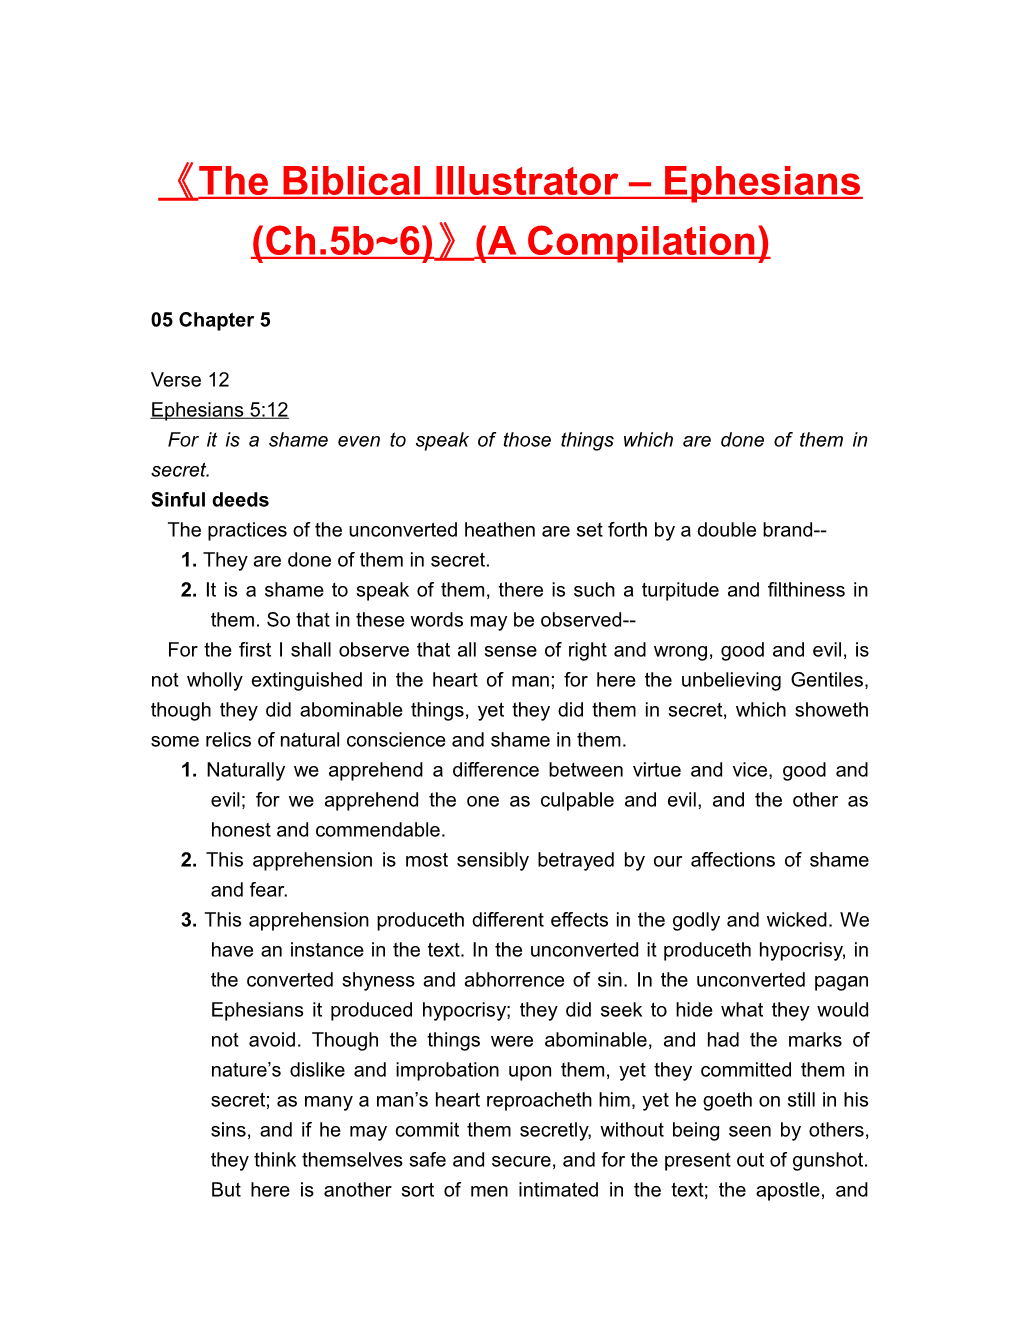 The Biblical Illustrator Ephesians (Ch.5B 6) (A Compilation)